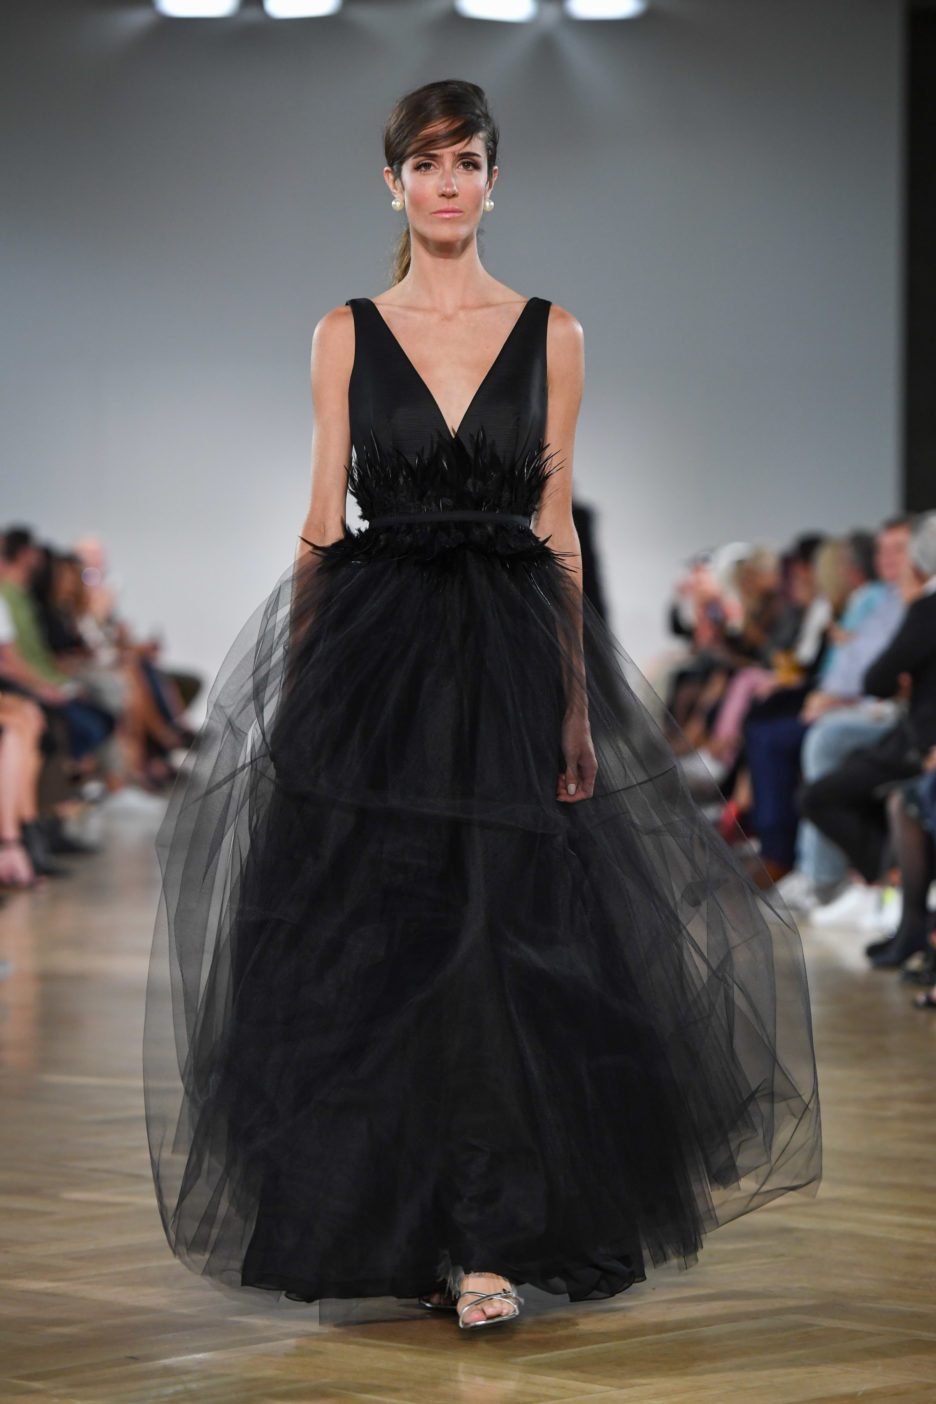 The Kim Newport Collection Debuts at Toronto Fashion Week!